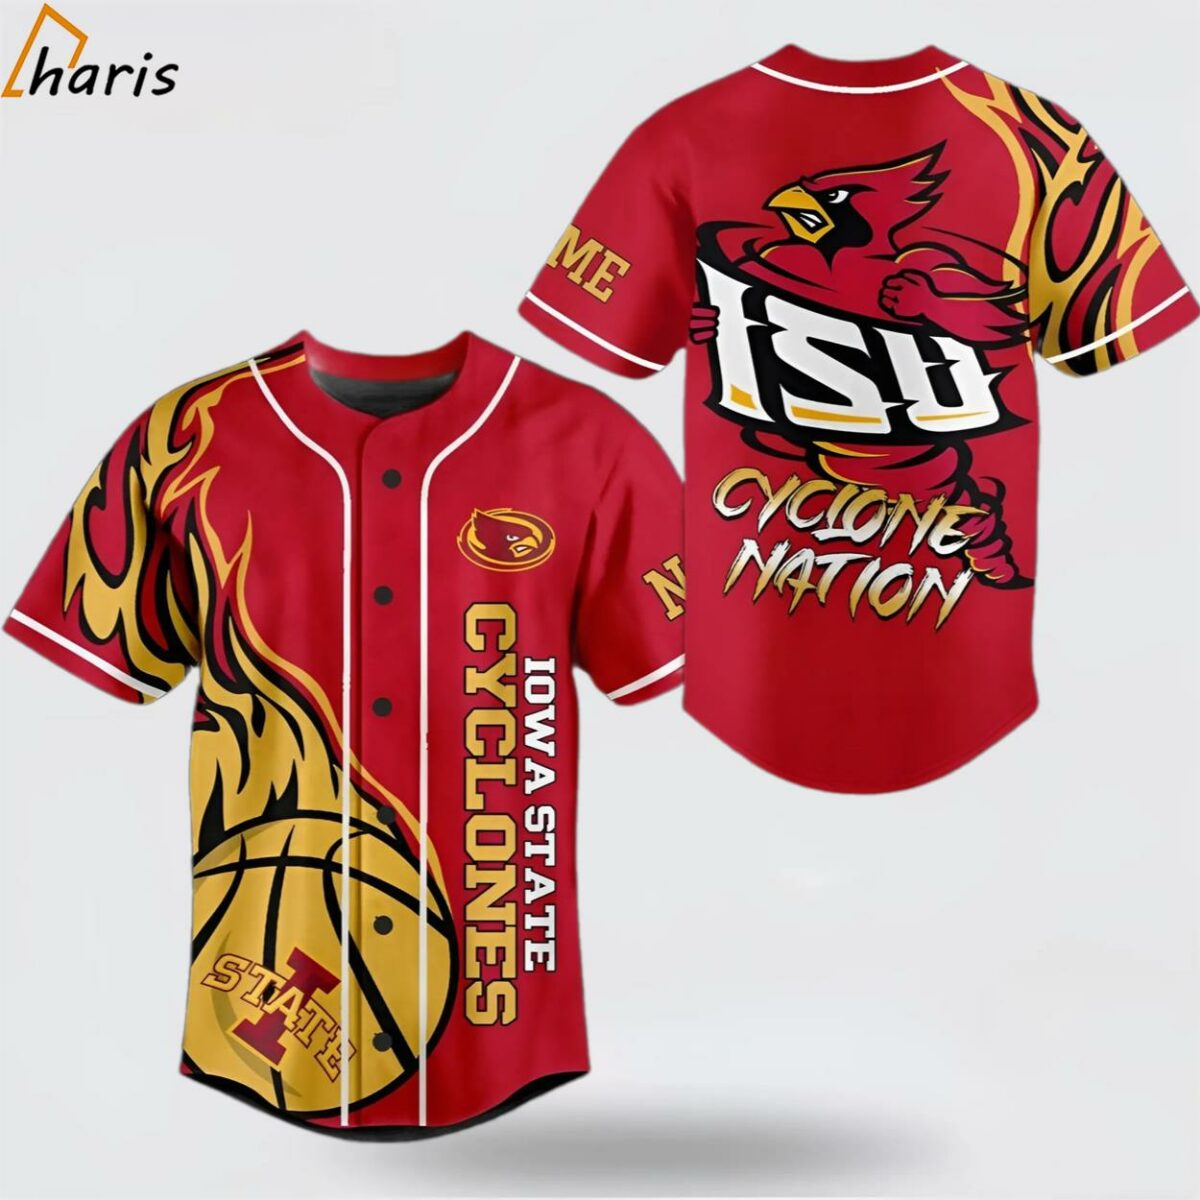 Cyclone Nation Iowa State Cyclones Custom Baseball Jersey 1 jersey